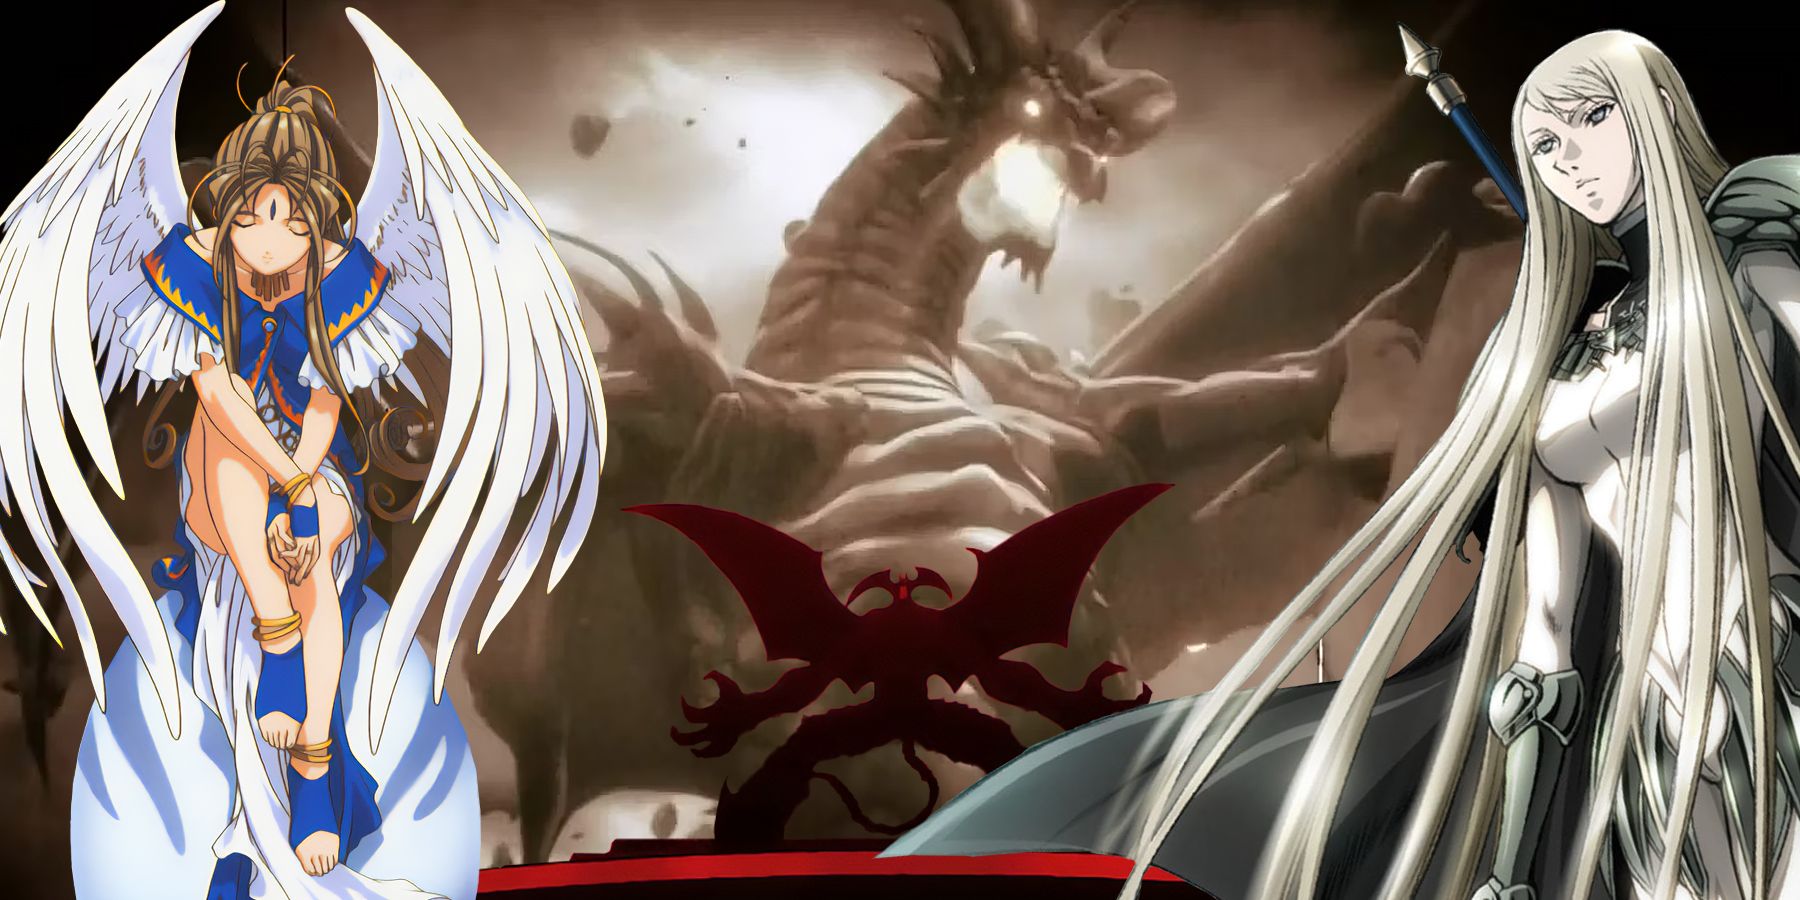 brenda mowat recommends Angels Vs Demons Anime